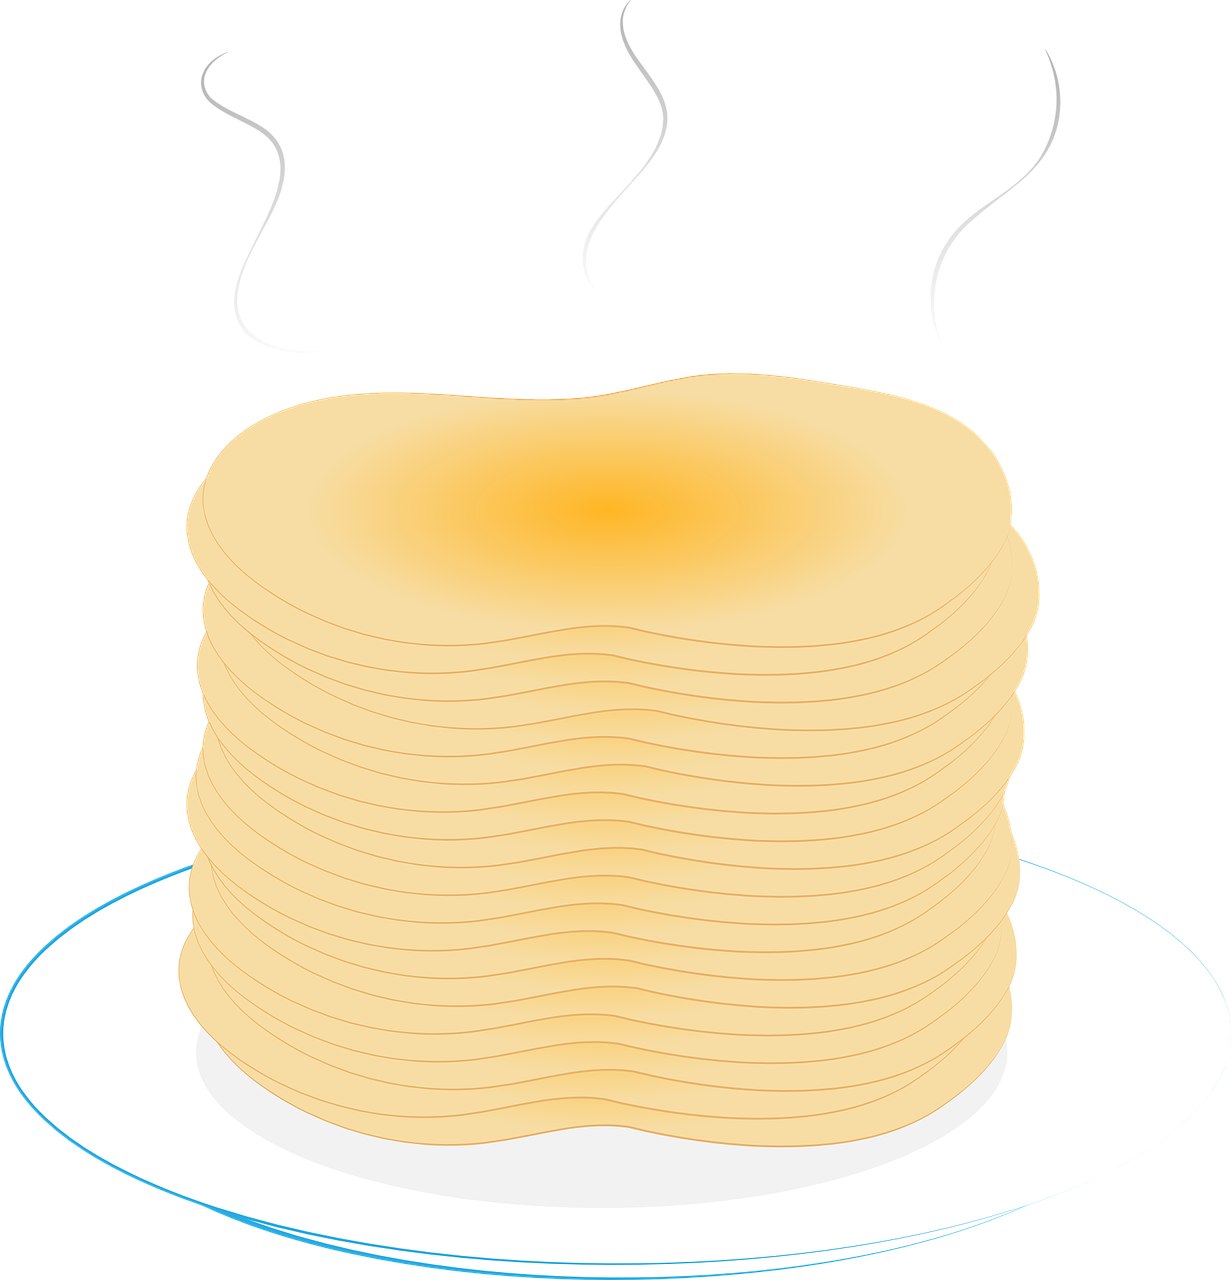 Zone-style flourless pancakes